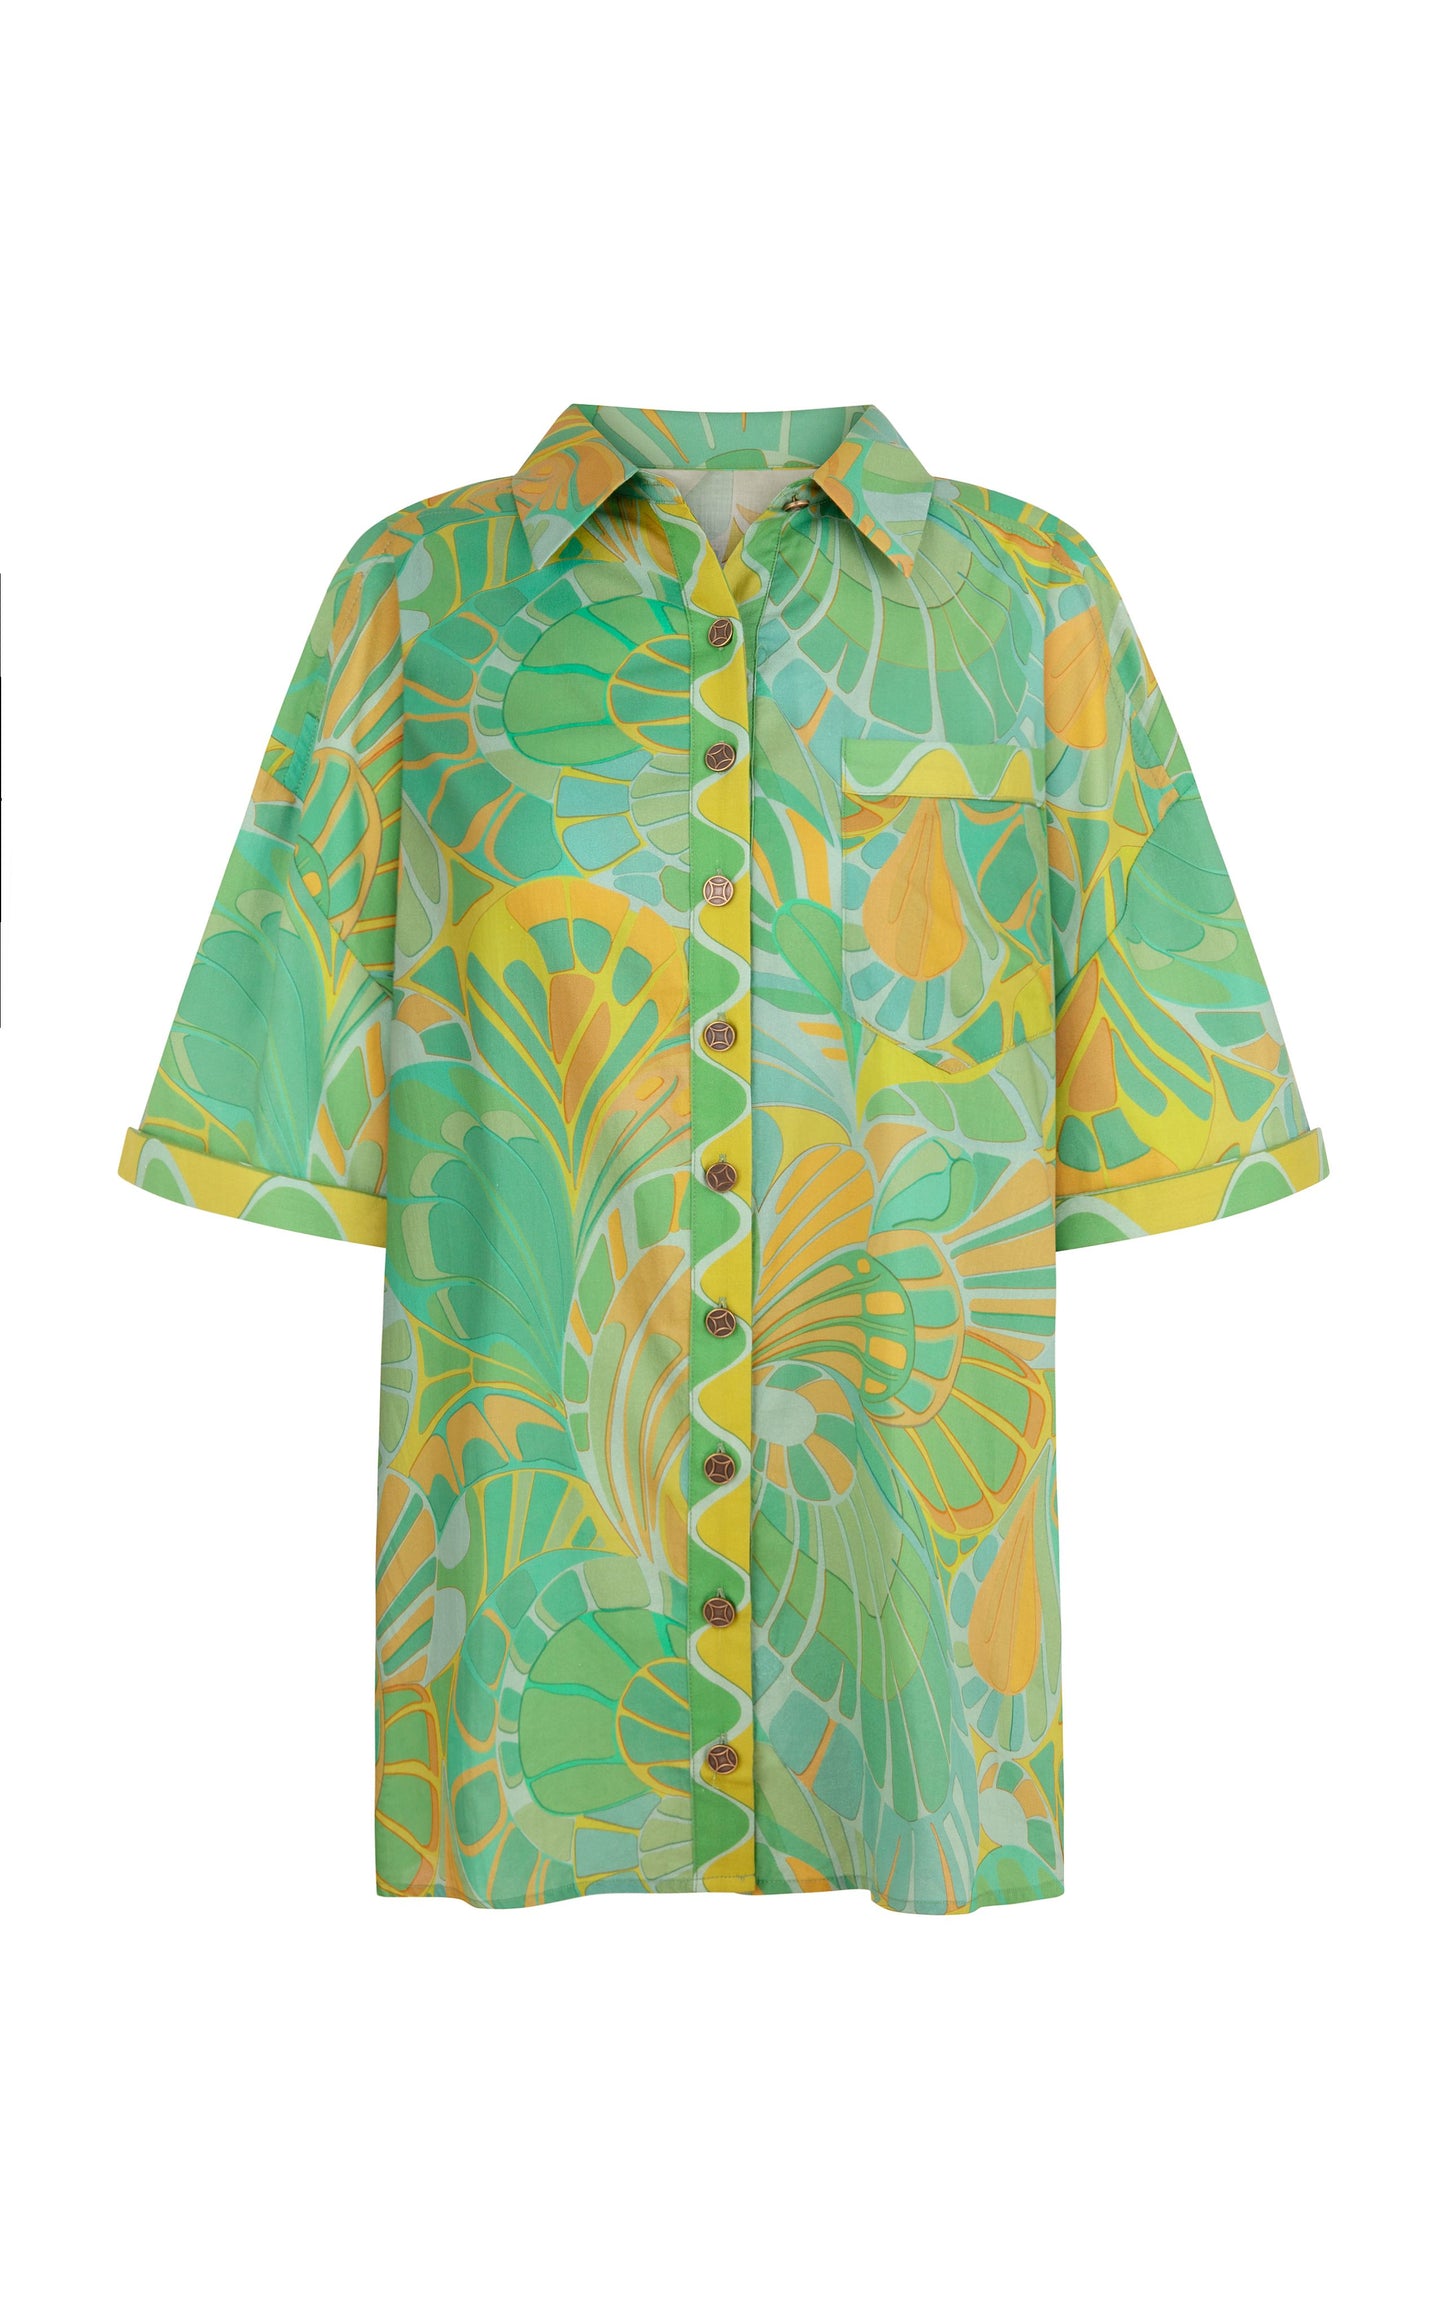 Tropic Shirt - Clover